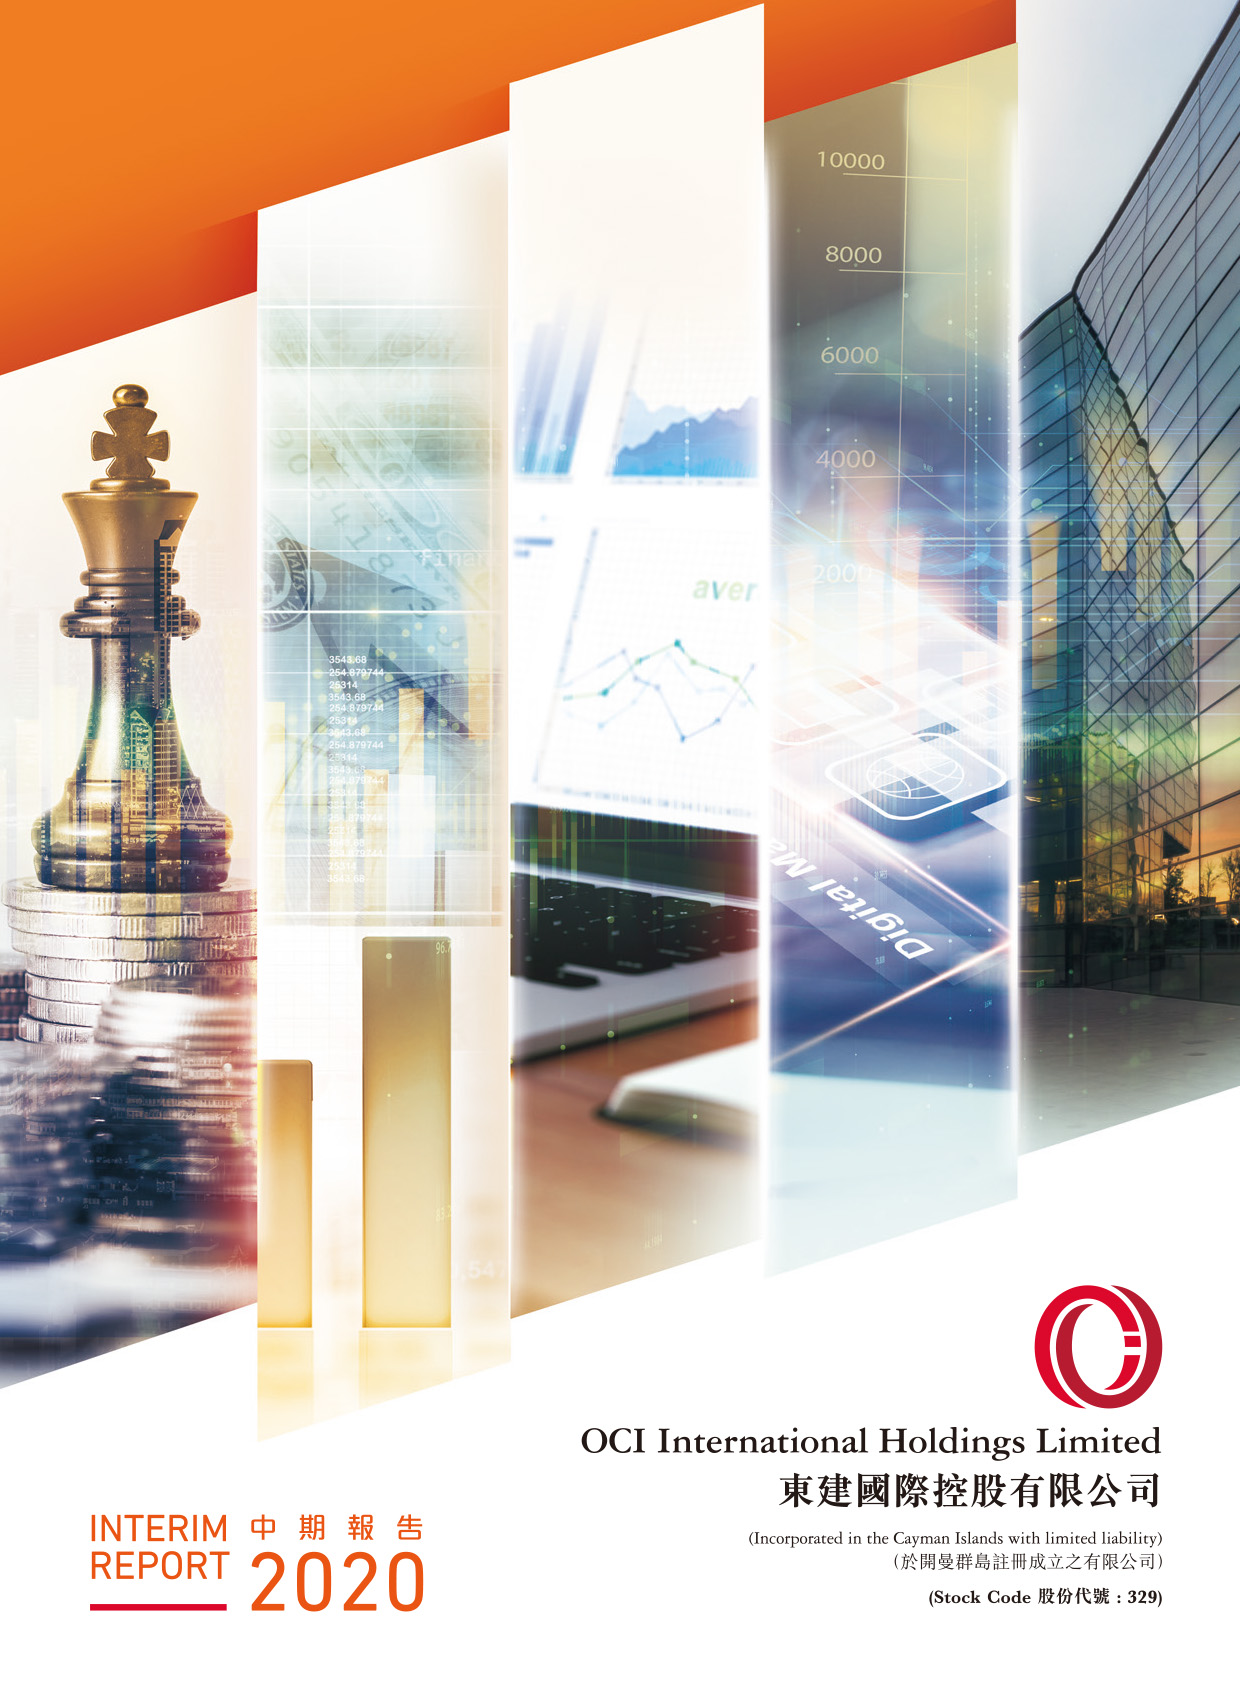 OCI International Holdings Limited